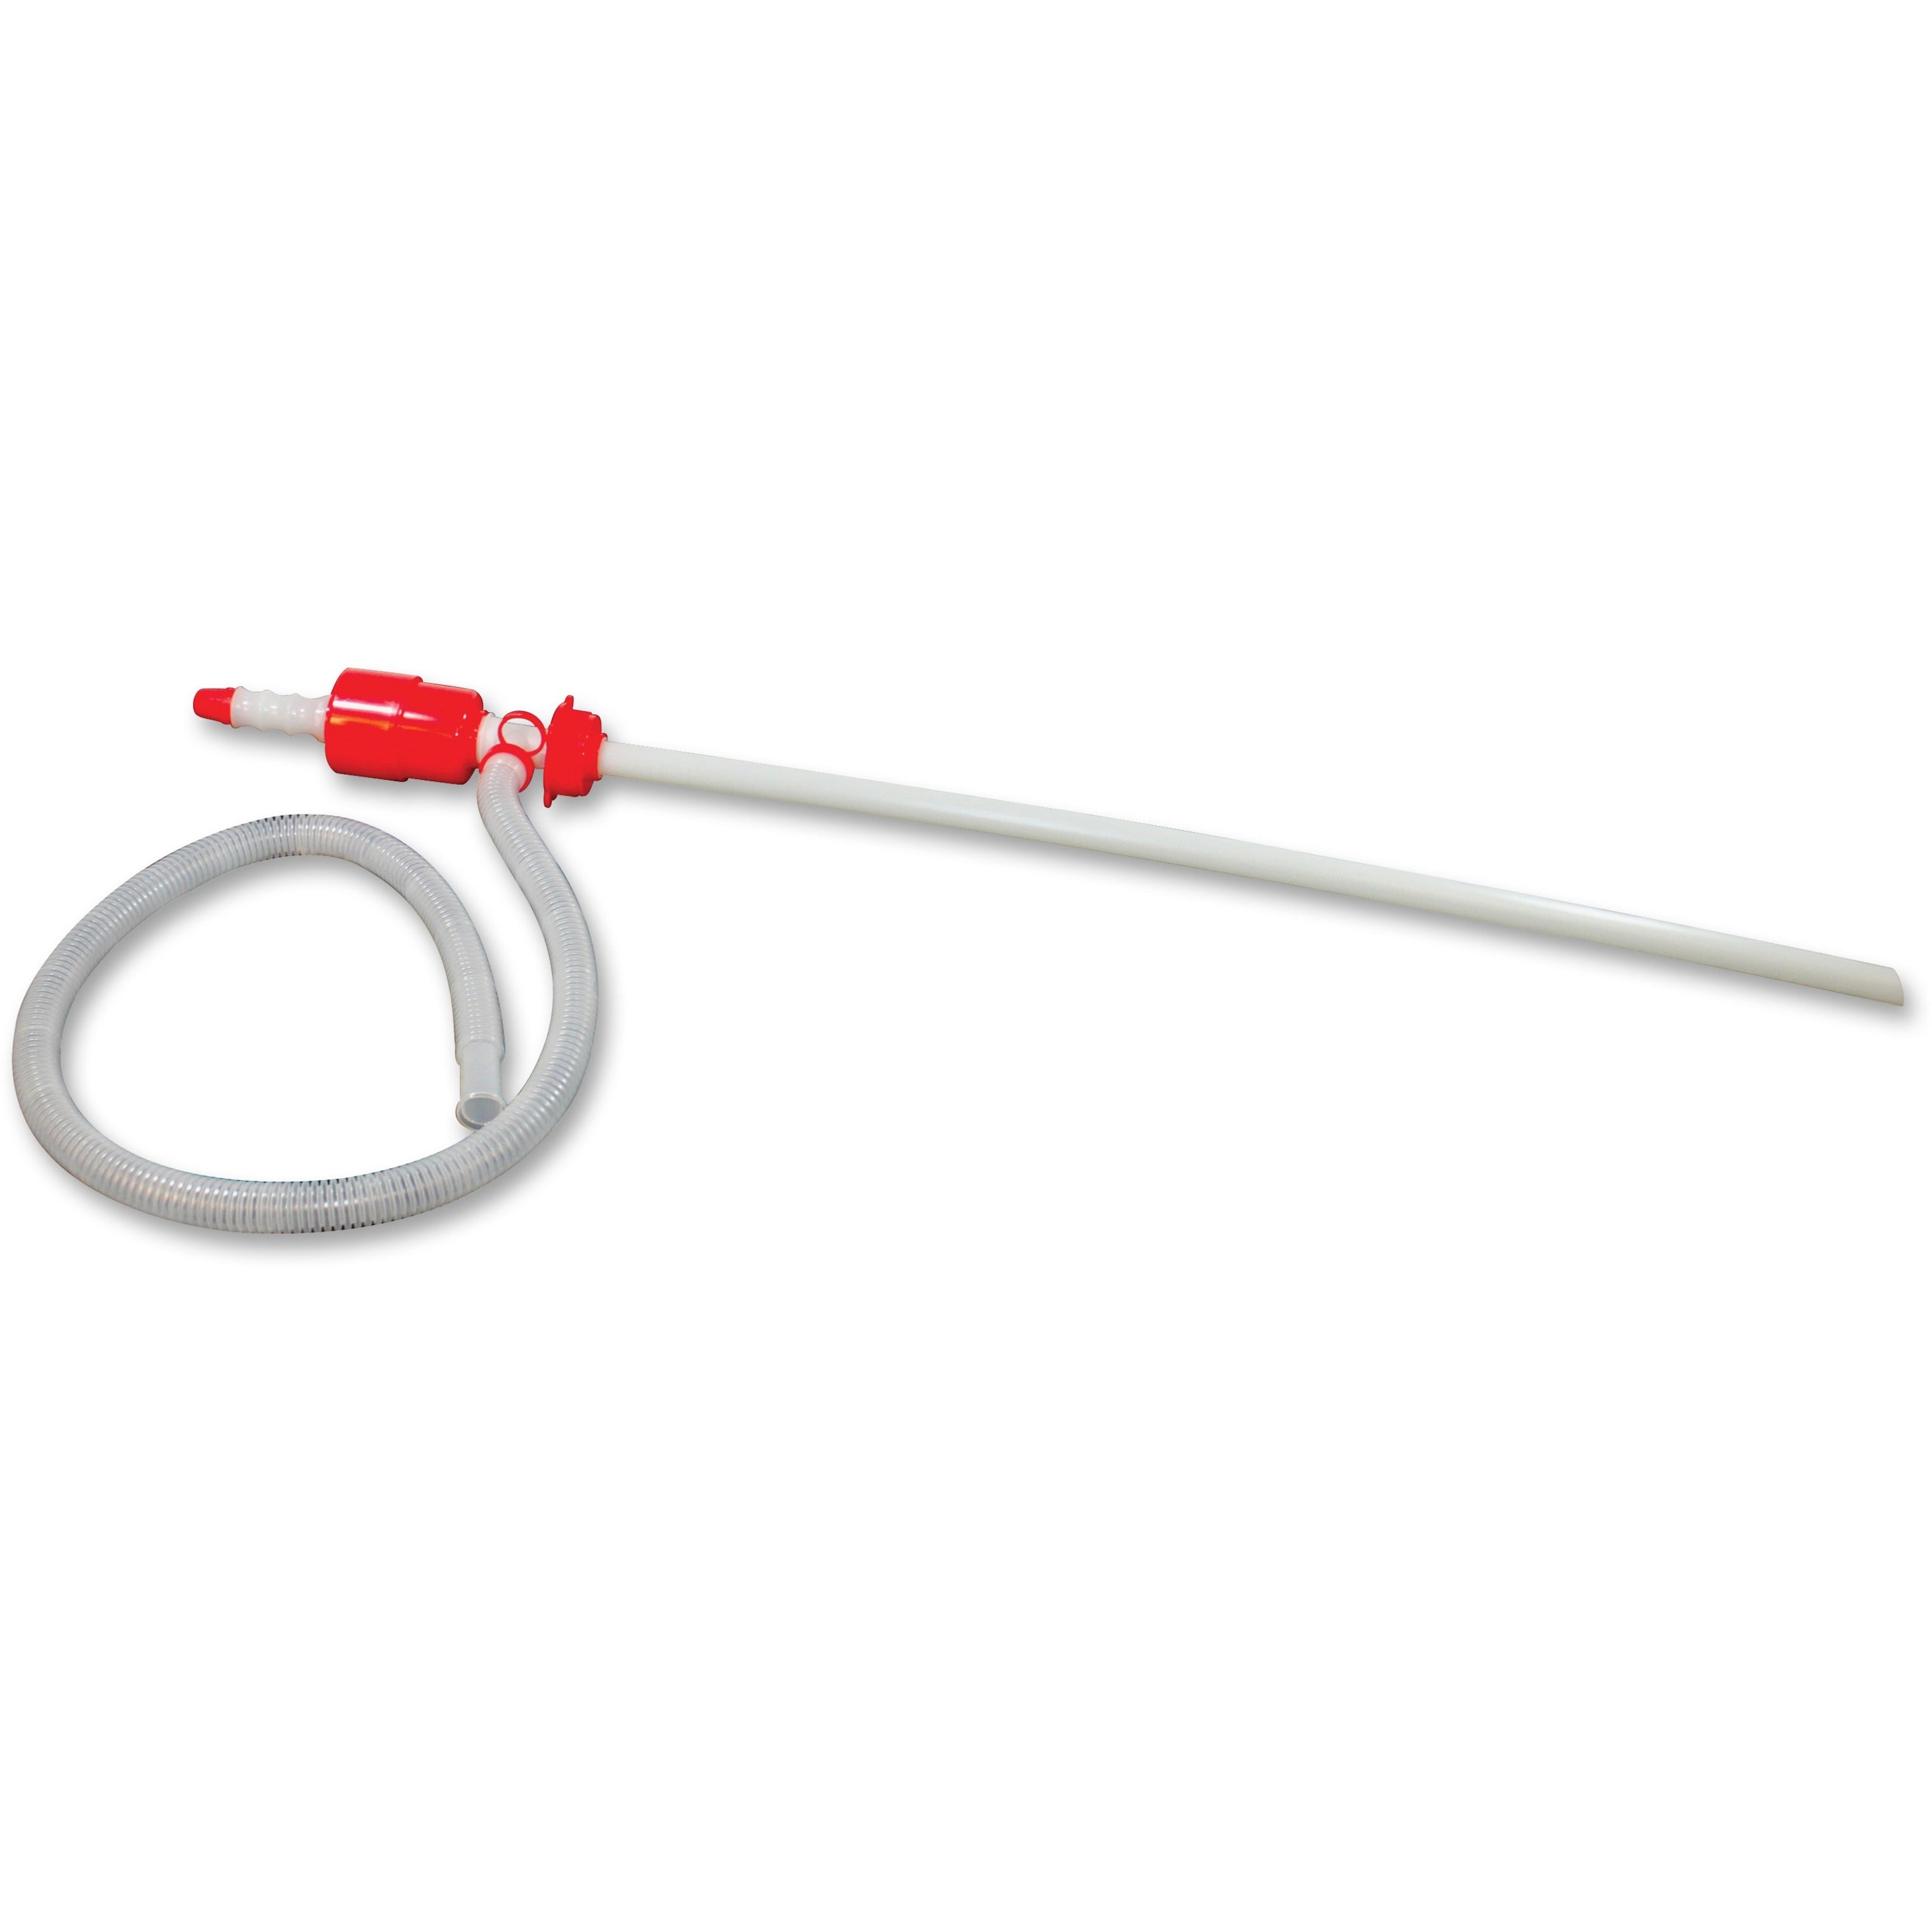 Impact Siphon Drum Pump - 4.6" Width x 45" Length - 1 Each - Red, White - 